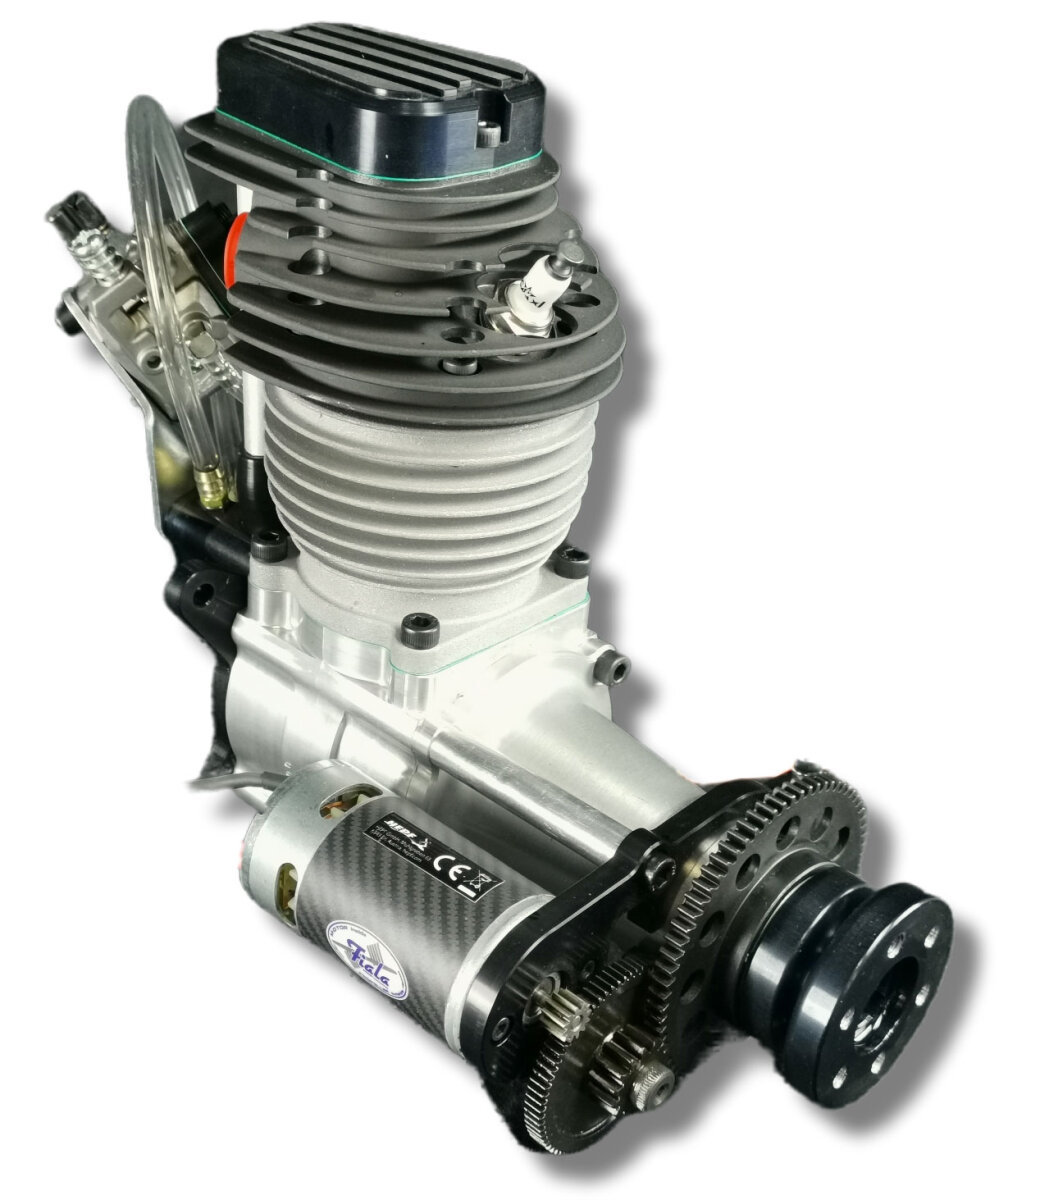 https://hepf.com/media/image/product/8278/lg/fiala-fm60s1-fs-4-takt-benzinmotor-60ccm-mit-e-starter.jpg